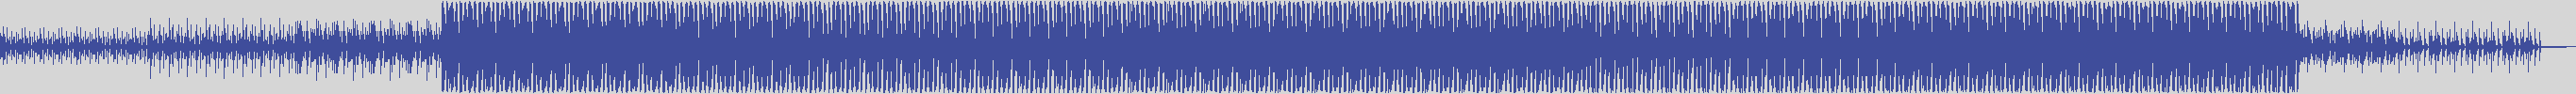 nf_boyz_records [NFY011] Dj Kenshiro - Pull Up [Original Mix] audio wave form